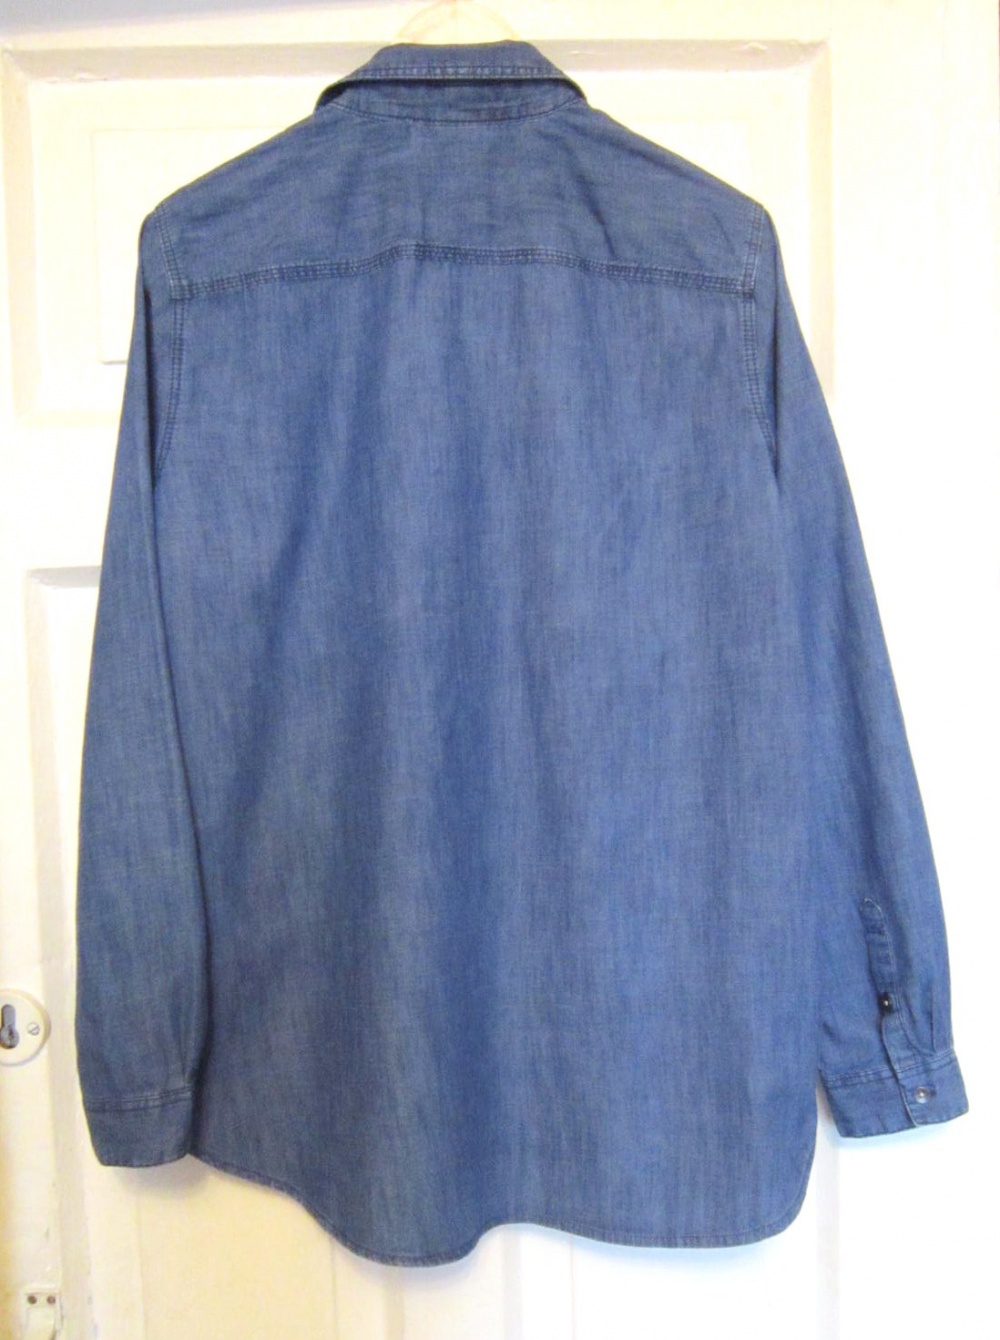 Джинсовая блуза -рубашка H&M  50/54 размер, one size.